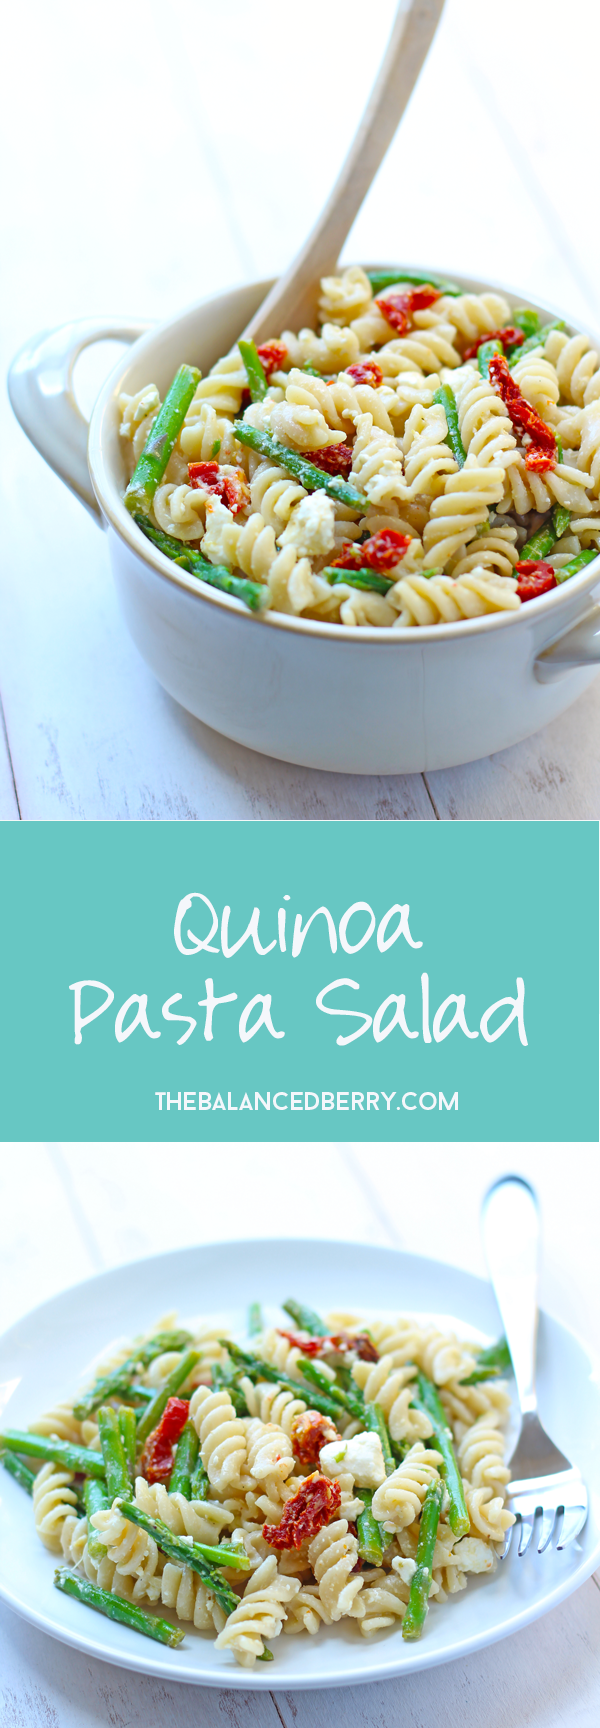 Quinoa Pasta Salad - the perfect summer side dish! via thebalancedberry.com